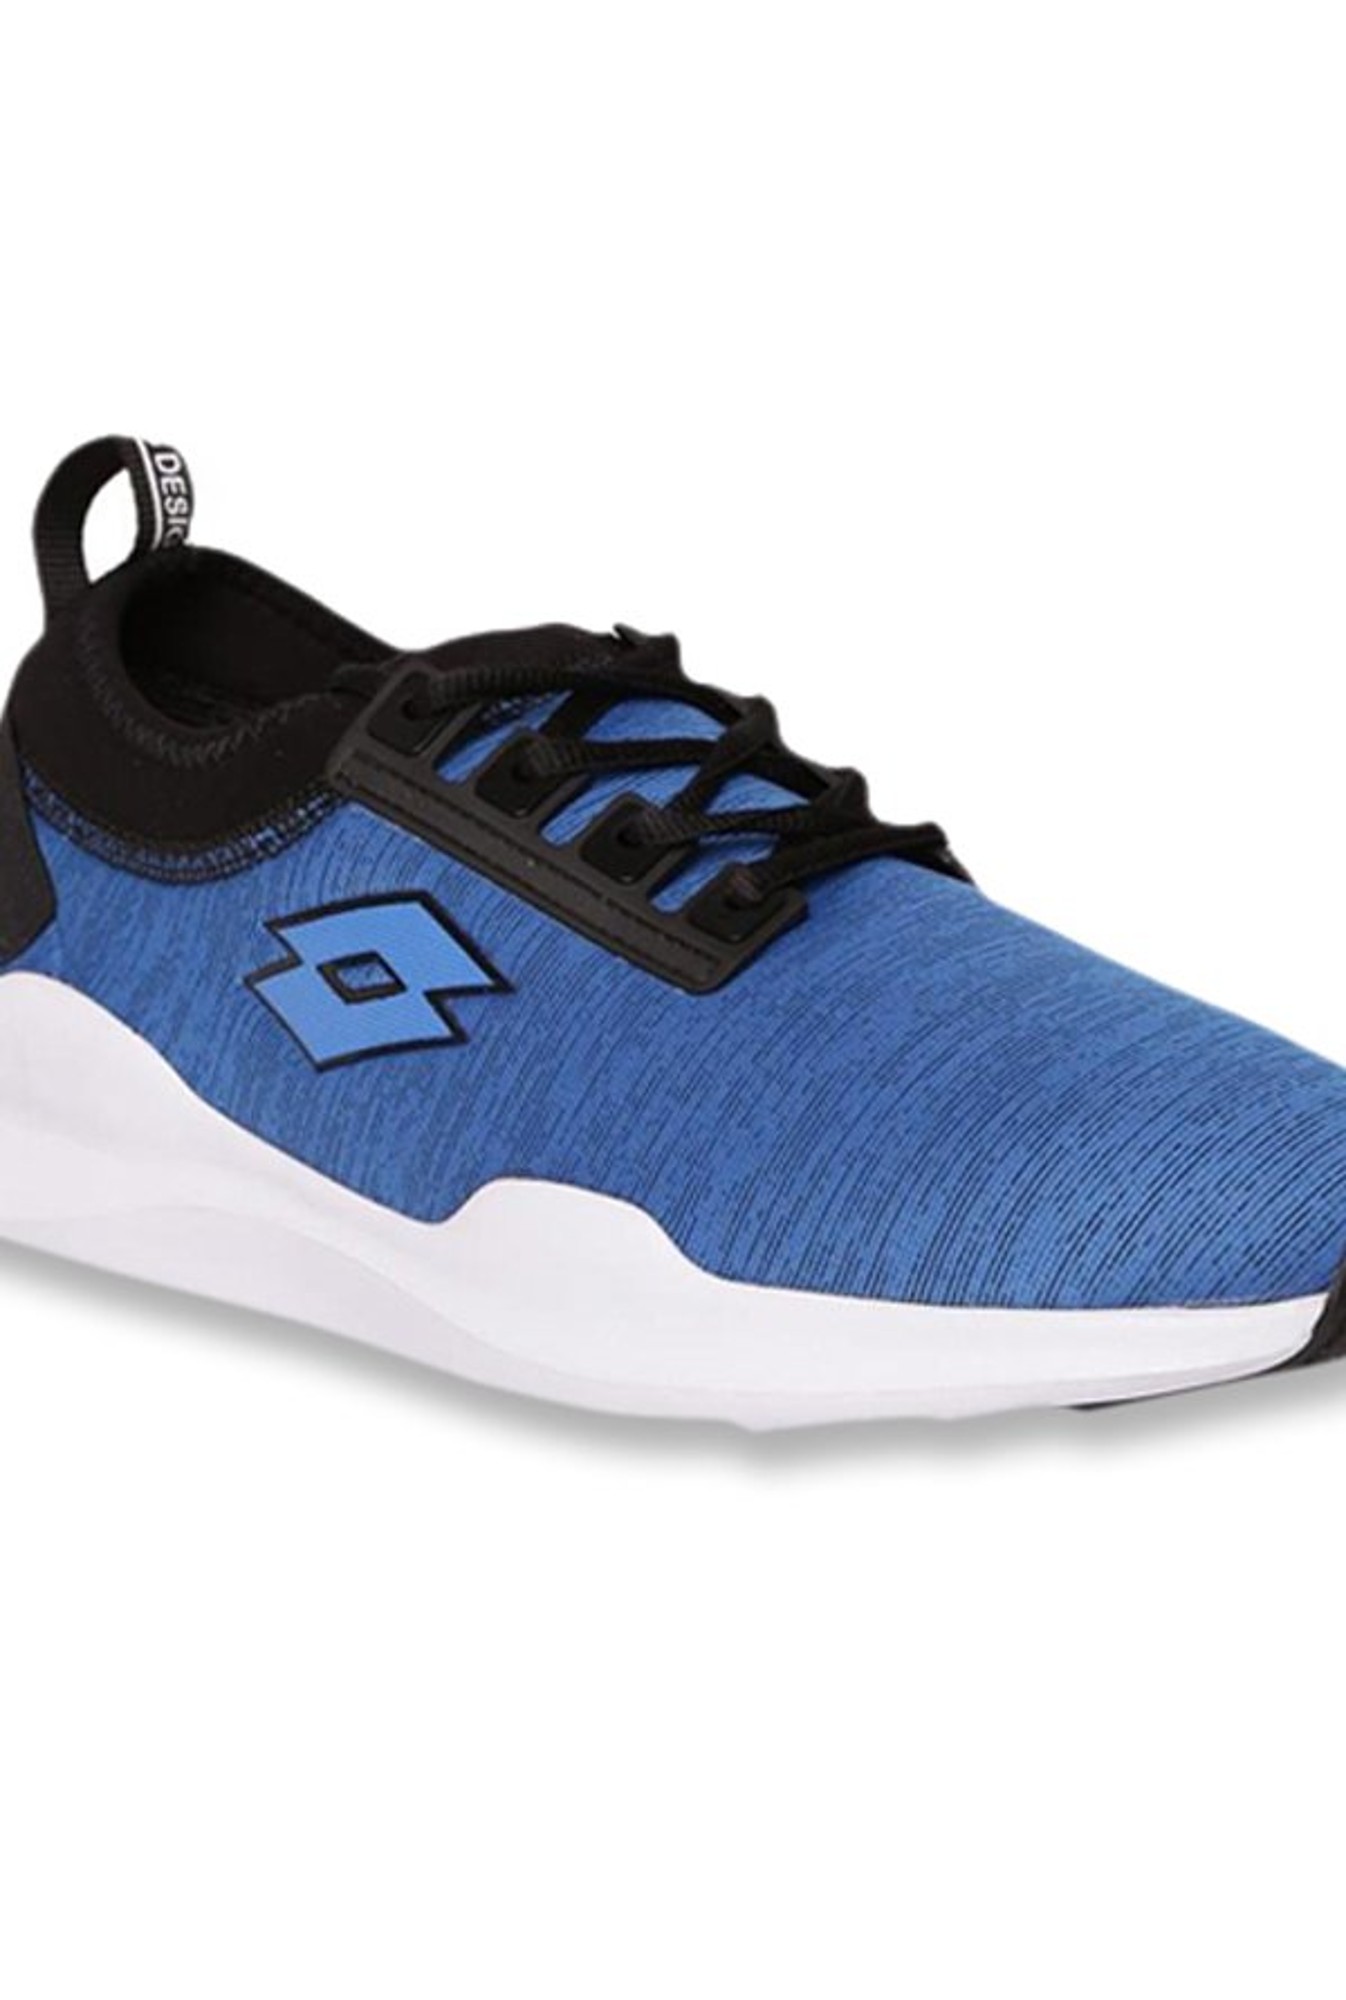 Buy Lotto Amerigo Blue Running Shoes for Men at Best Price @ Tata CLiQ